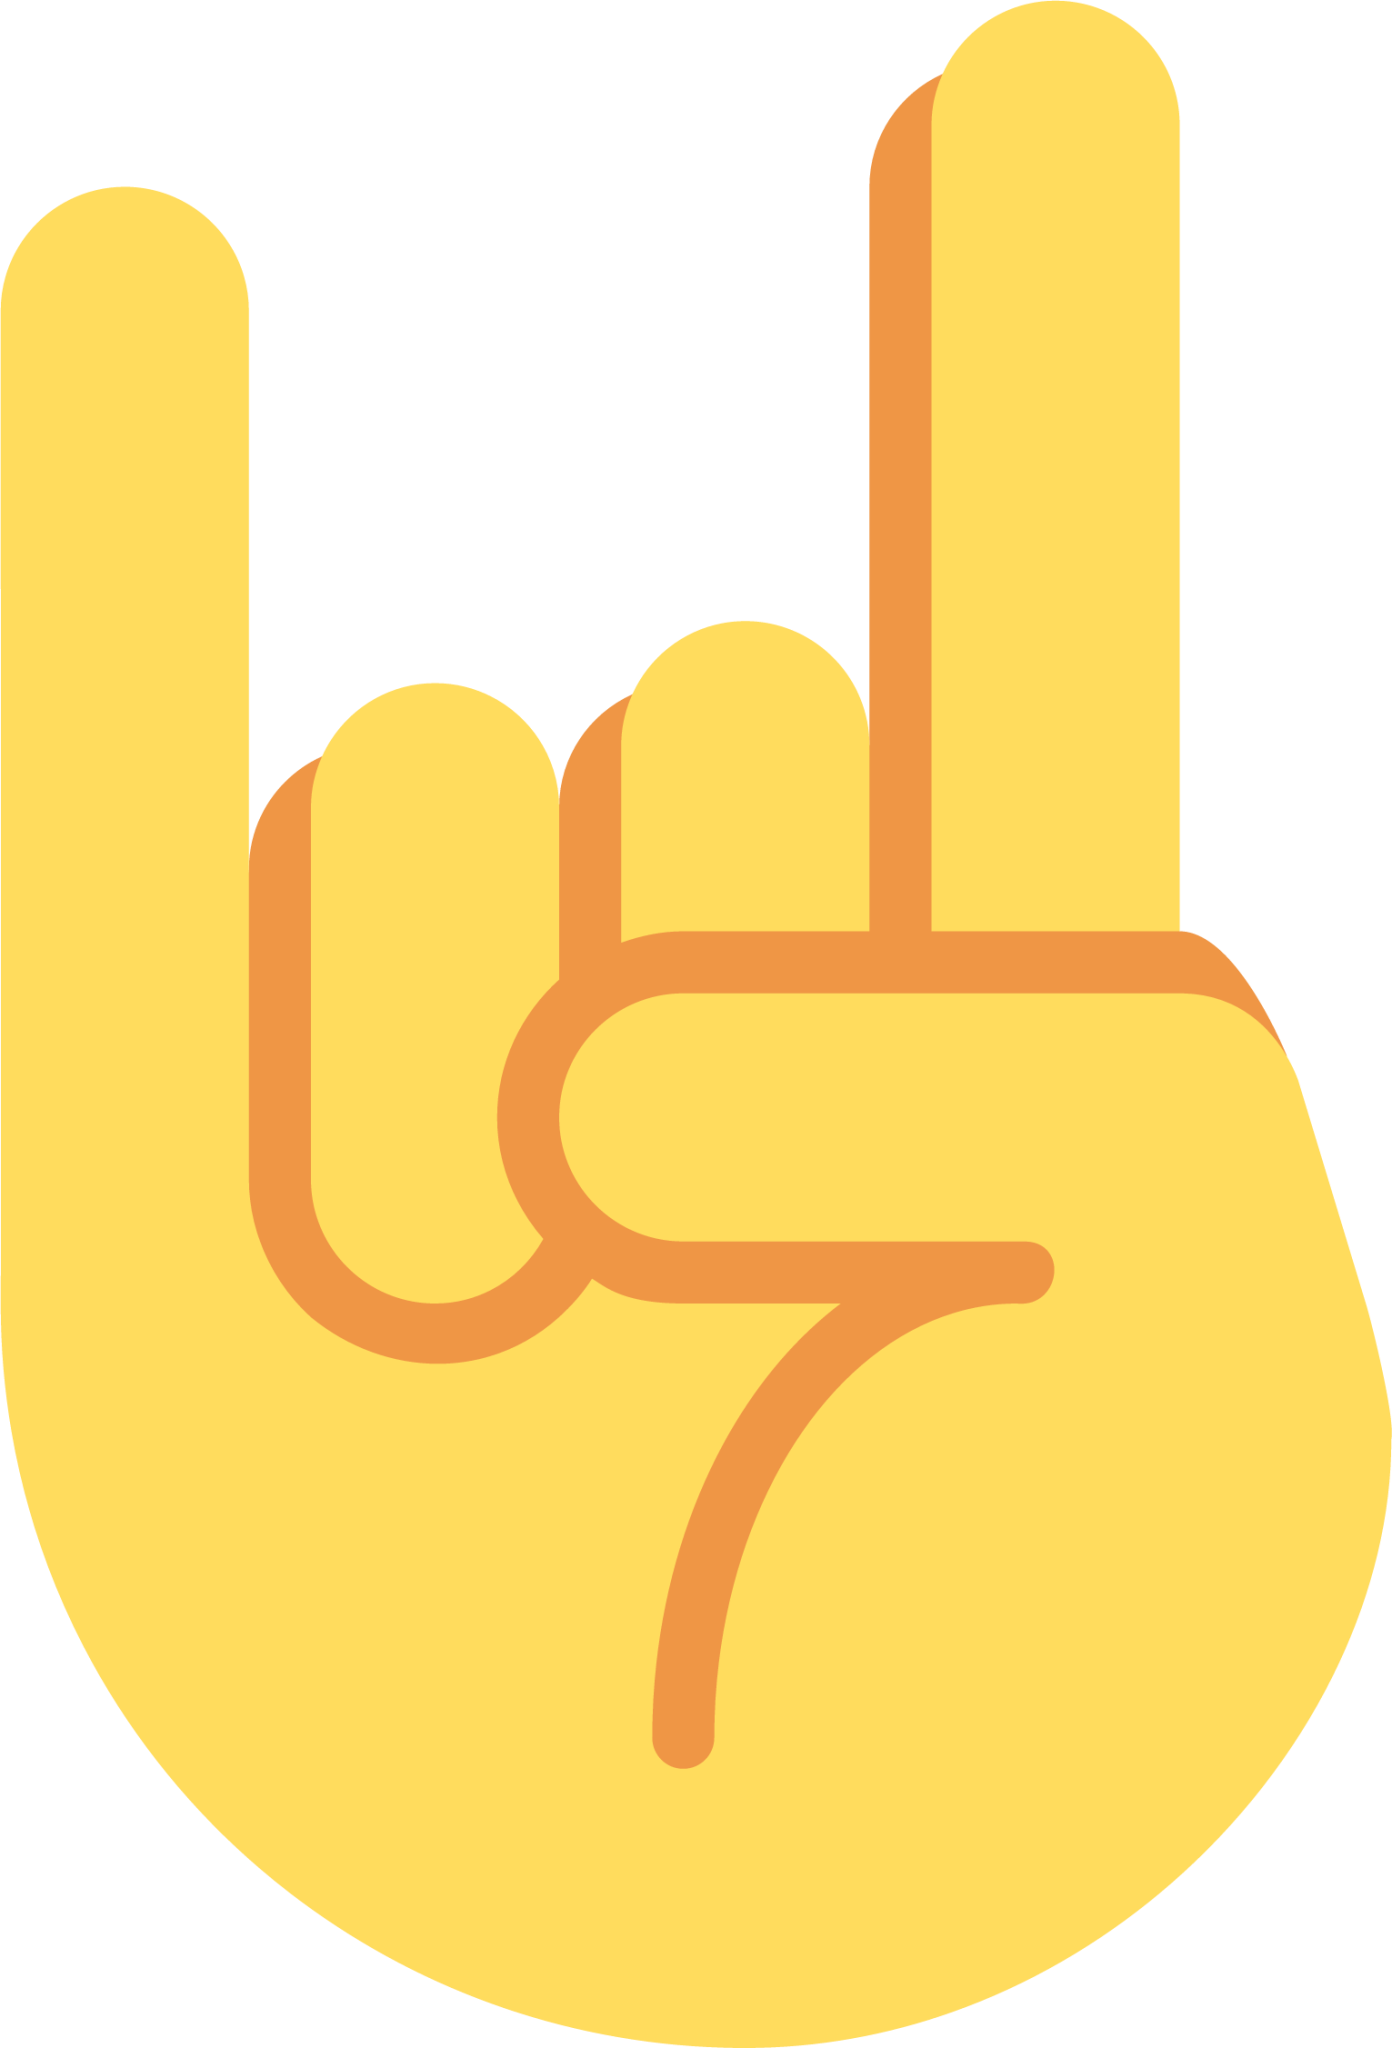 sign of the horns emoji